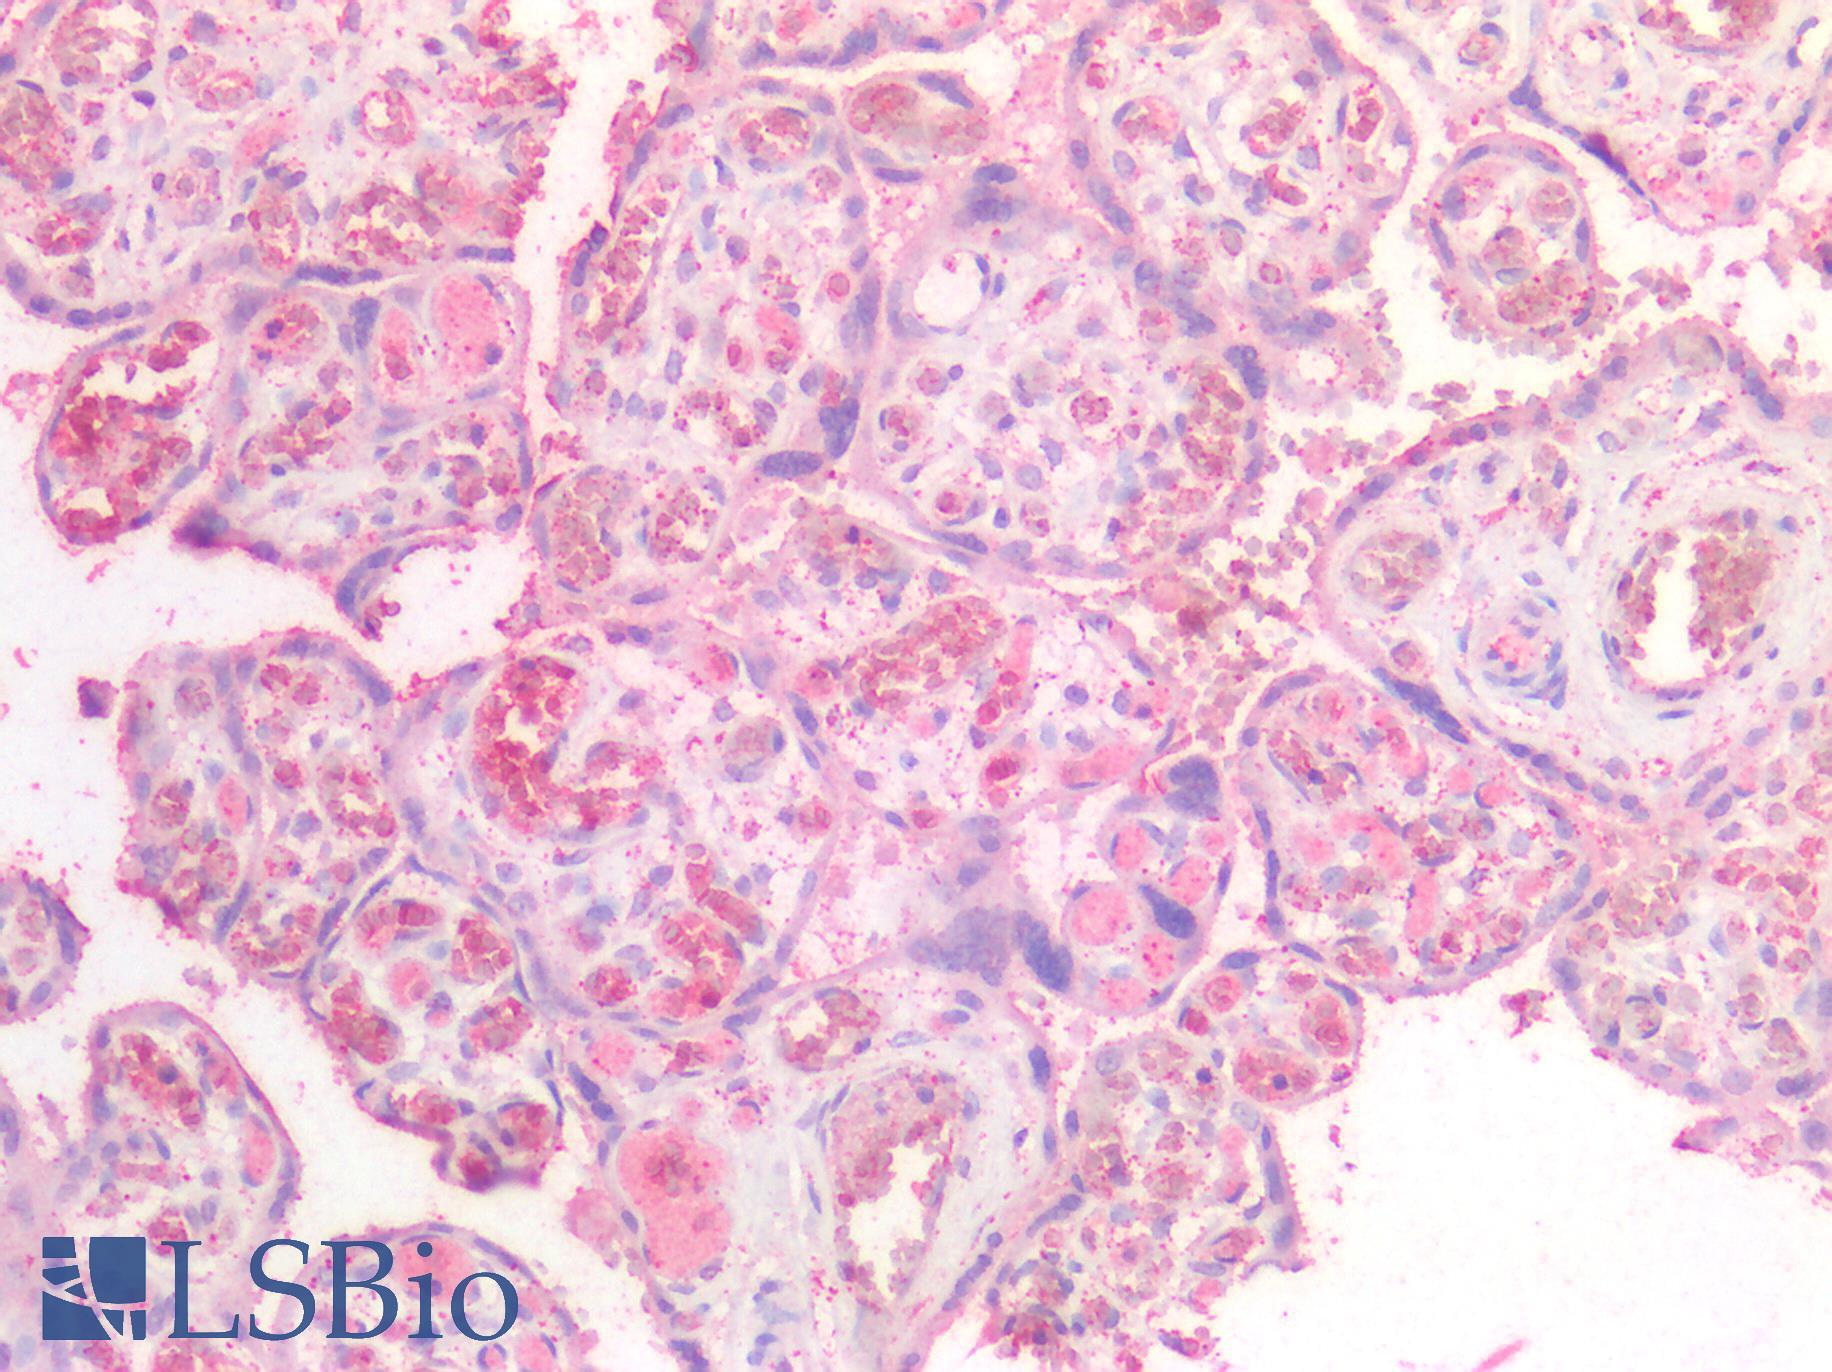 NTN1 / Netrin 1 Antibody - Human Placenta: Formalin-Fixed, Paraffin-Embedded (FFPE)